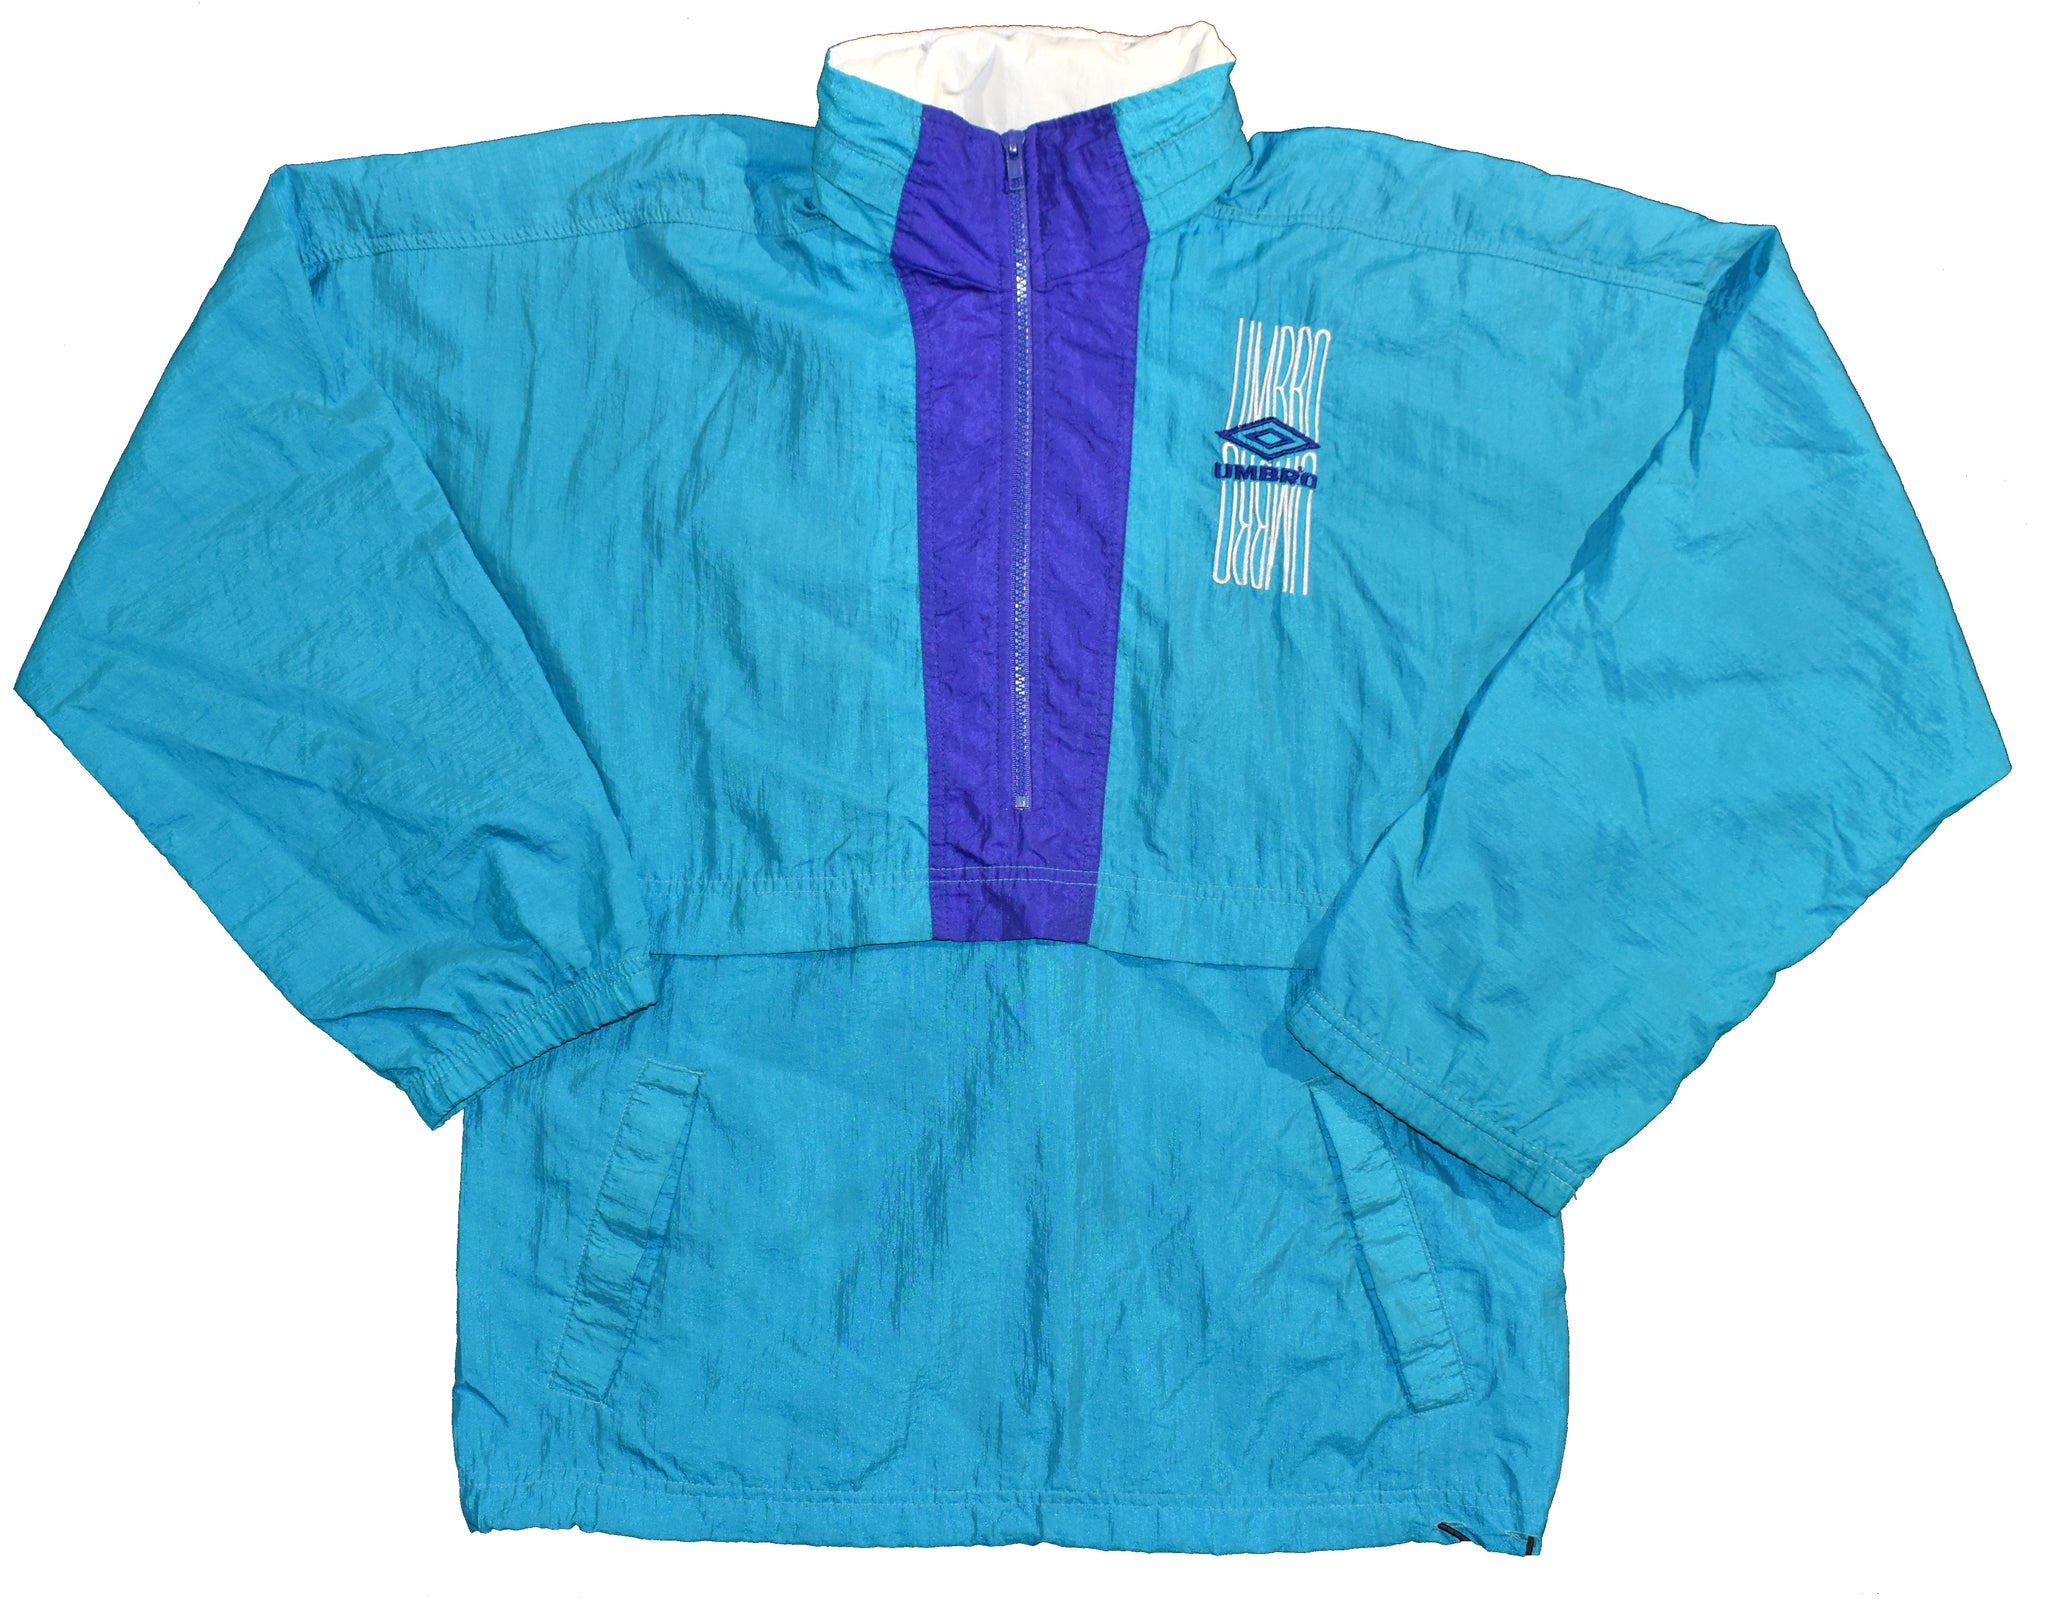 Vintage 90s Umbro Windbreaker Jacket | Beyond 94